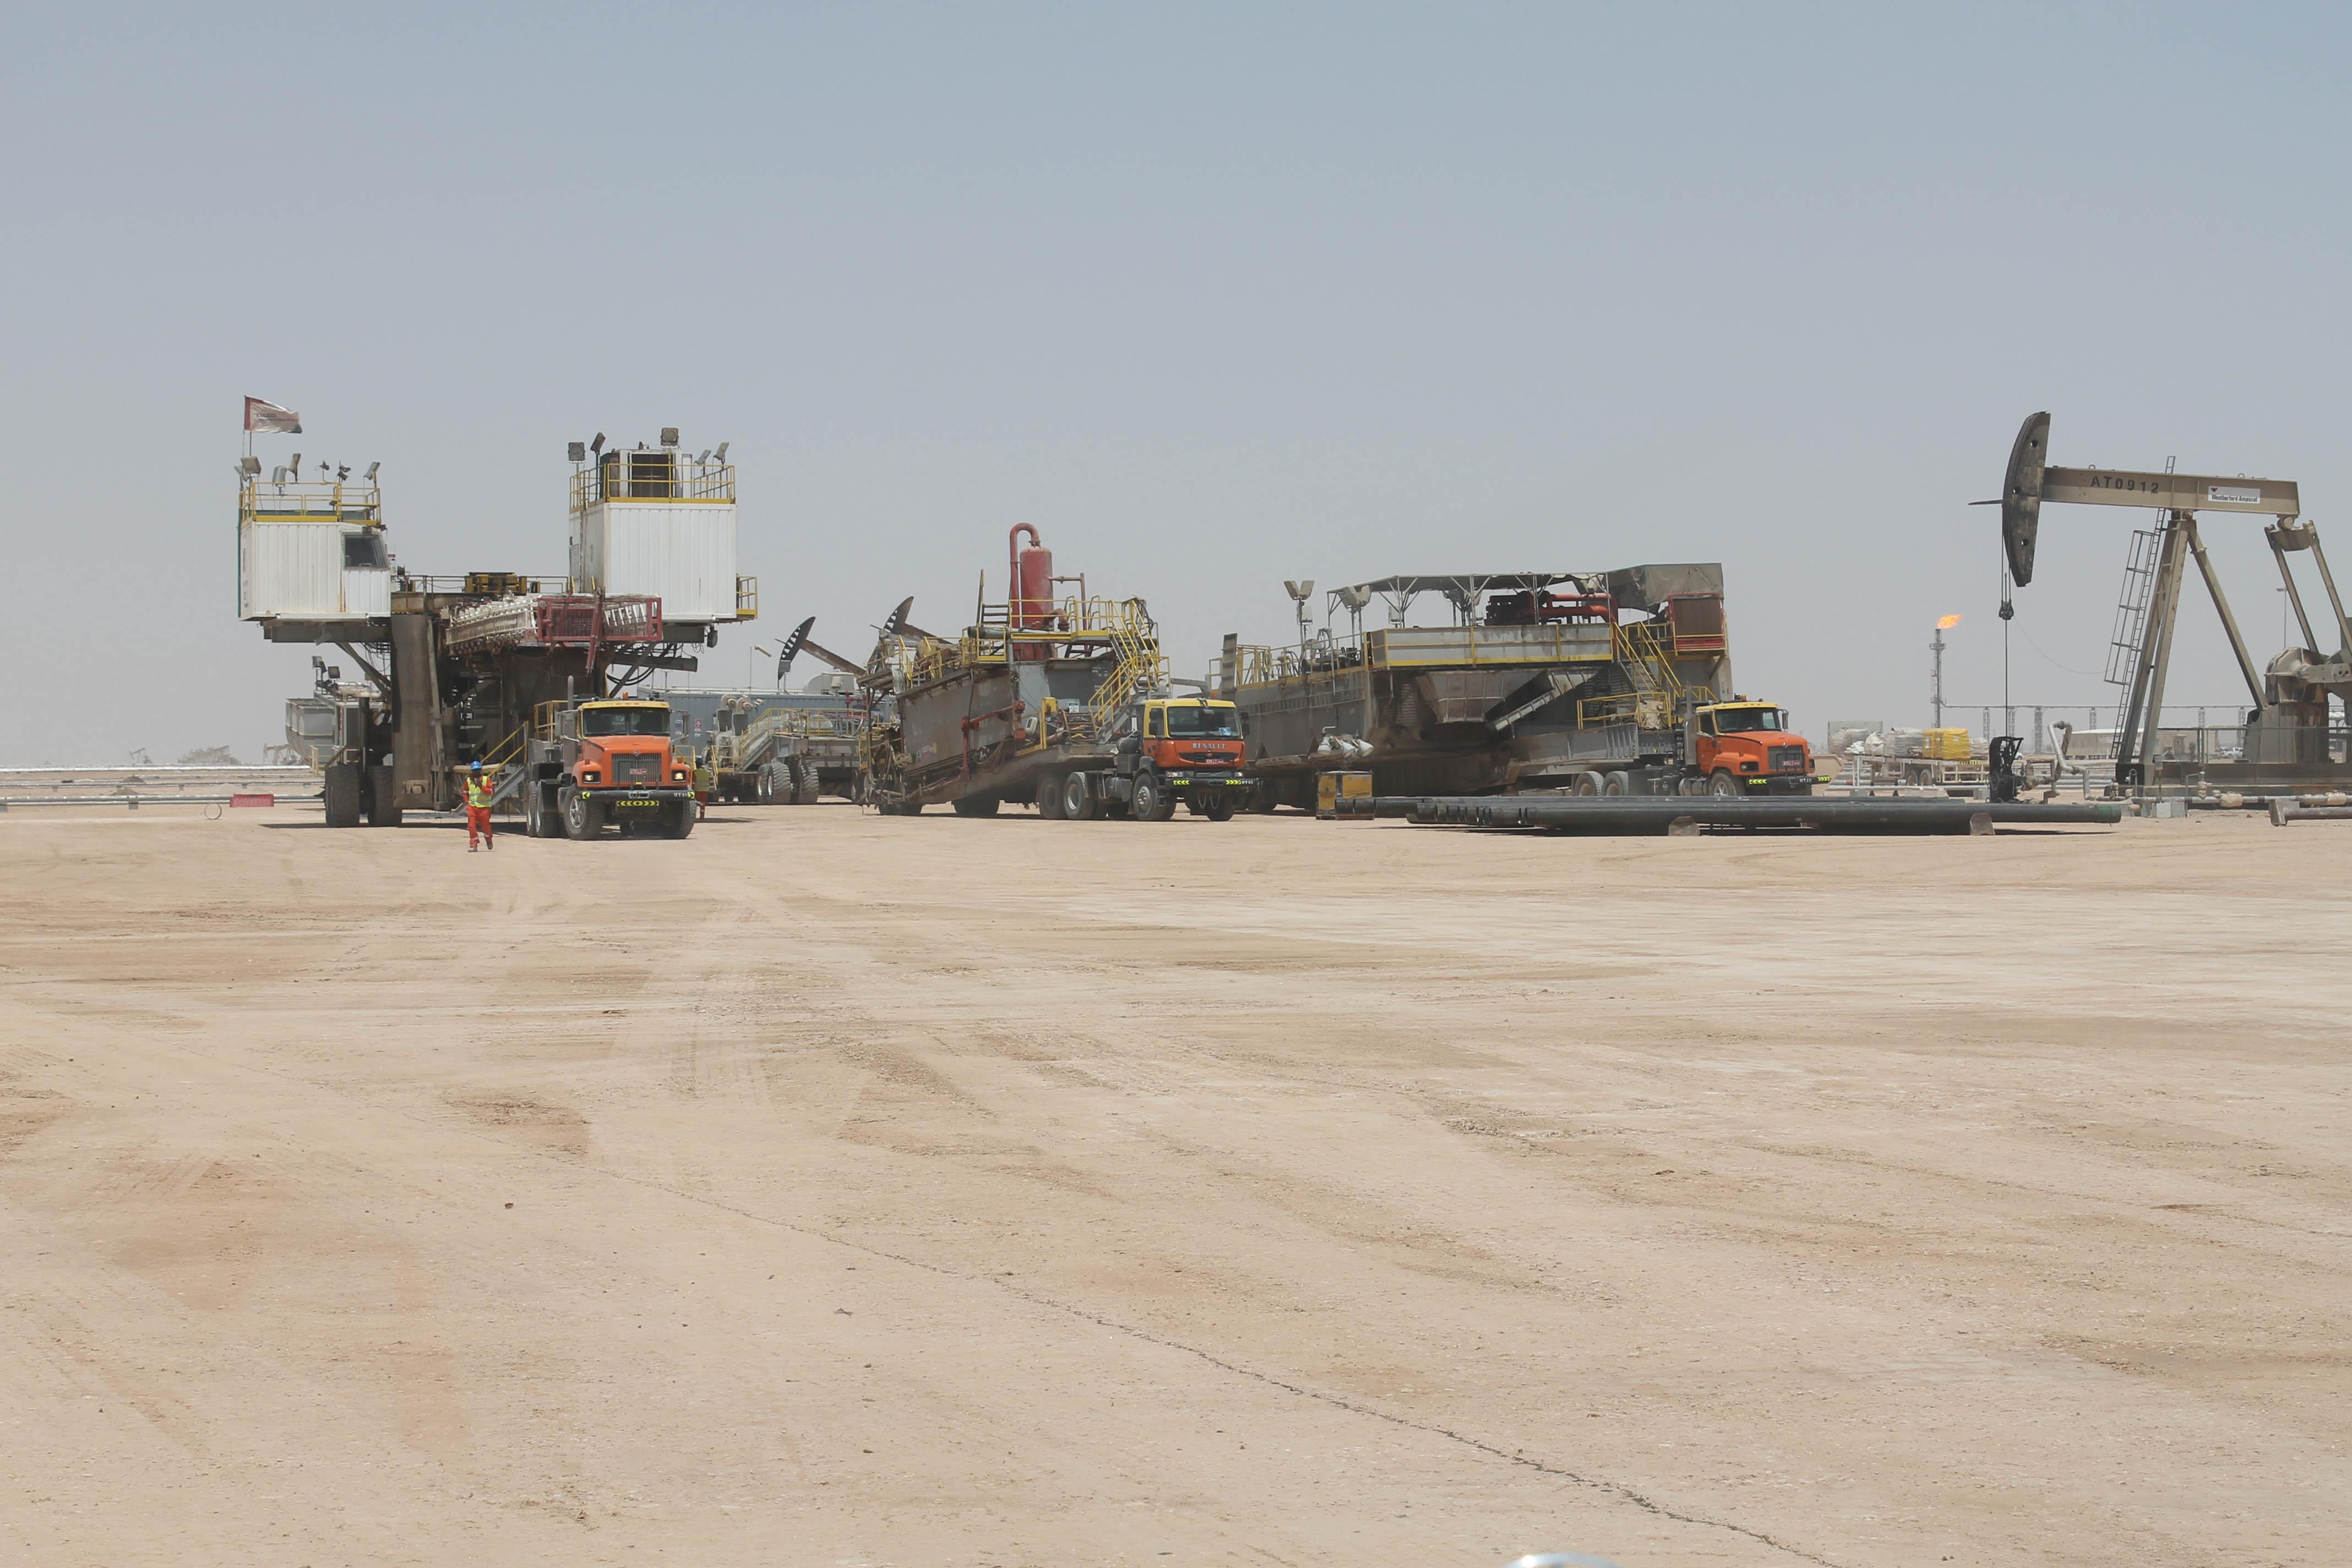 Desert Middle East oil & gas truck trailer for sale